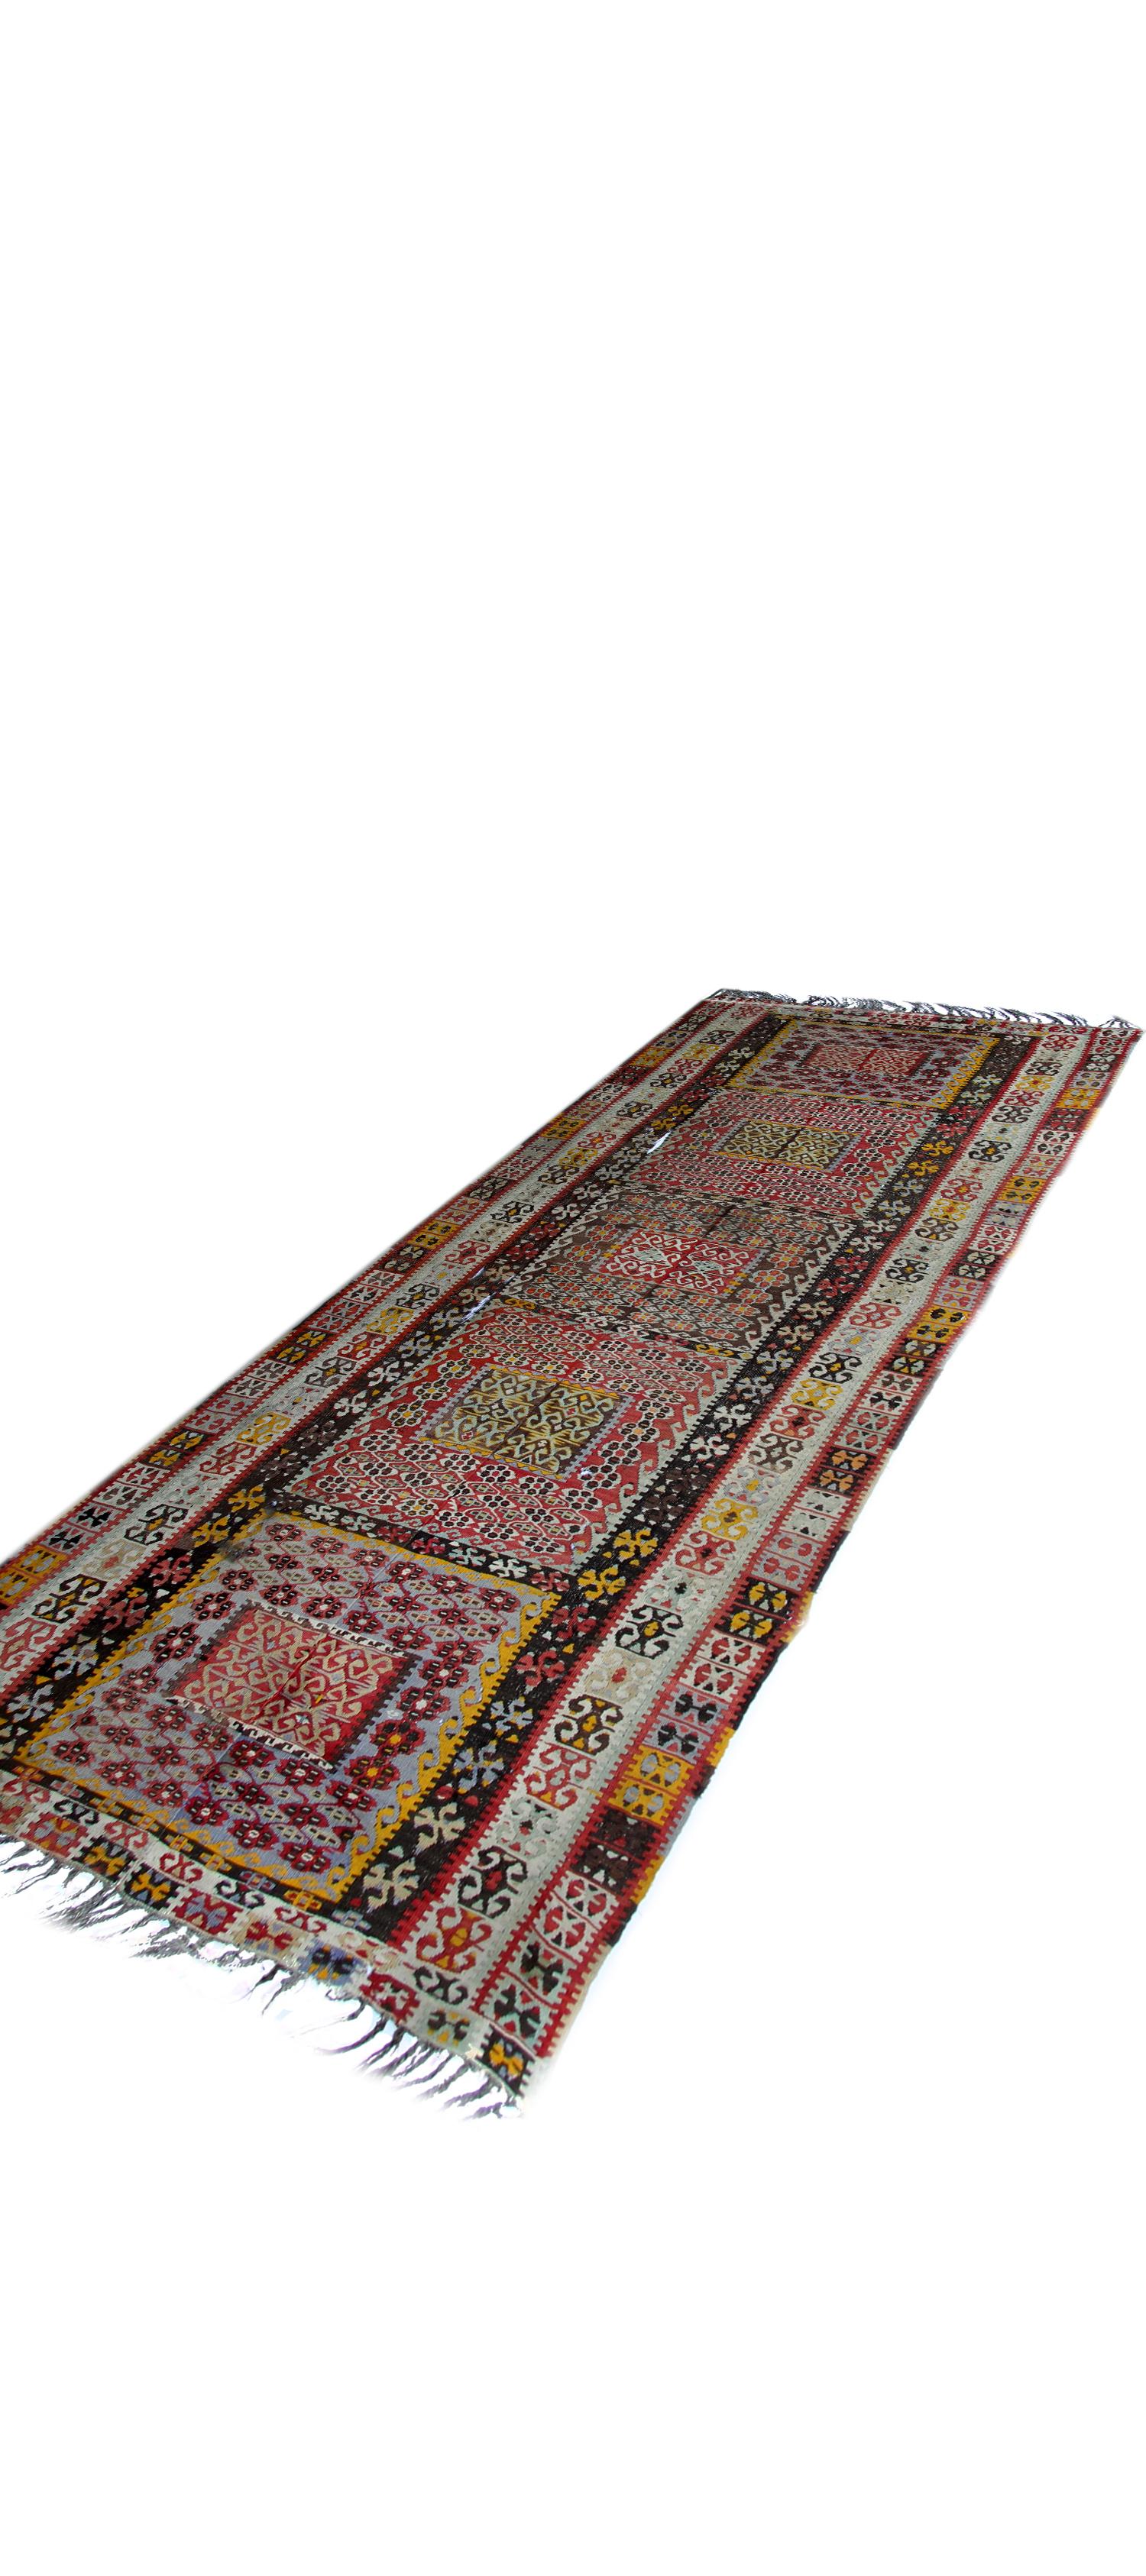 Rustic Handmade Carpet Antique Turkish Kilim Rug Traditional Tribal Runner Rug For Sale